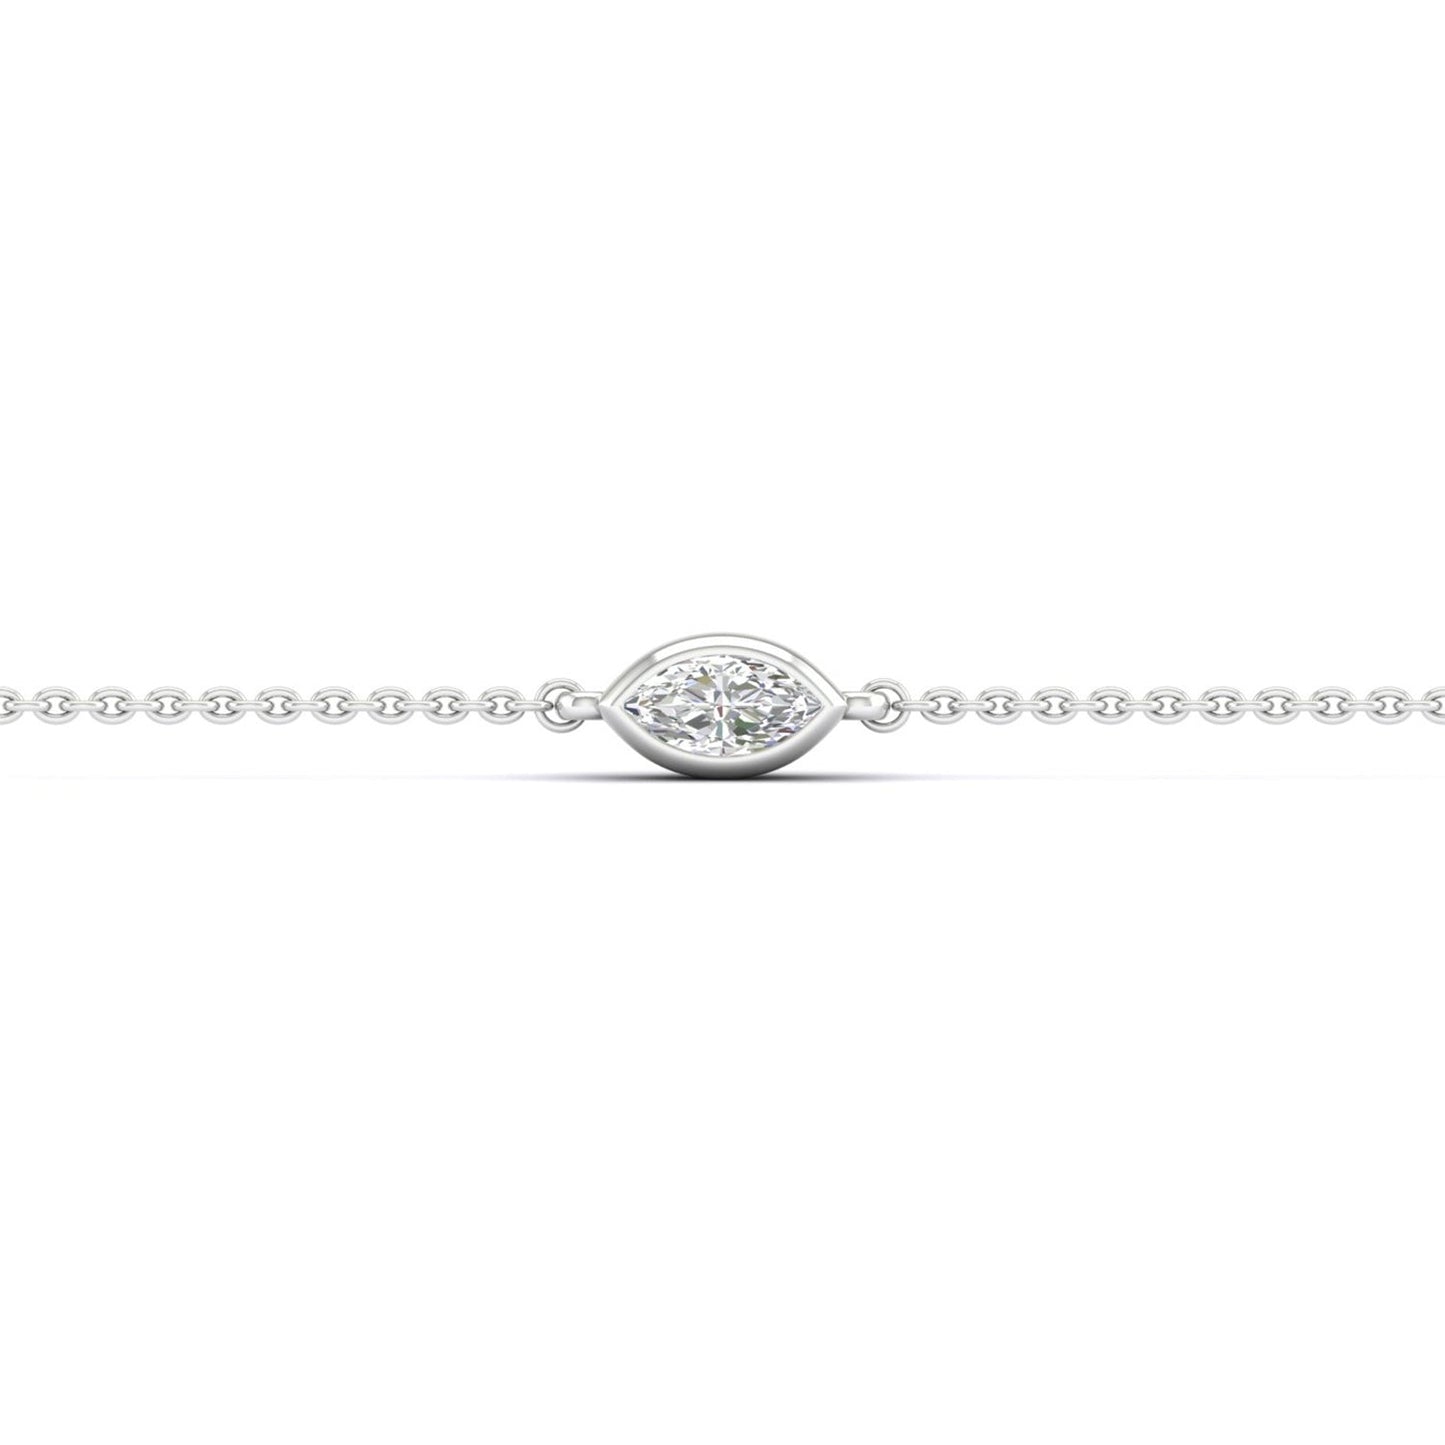 Marquise Diamond Glitter Bracelet_Product angle_1/5 Ct. - 3